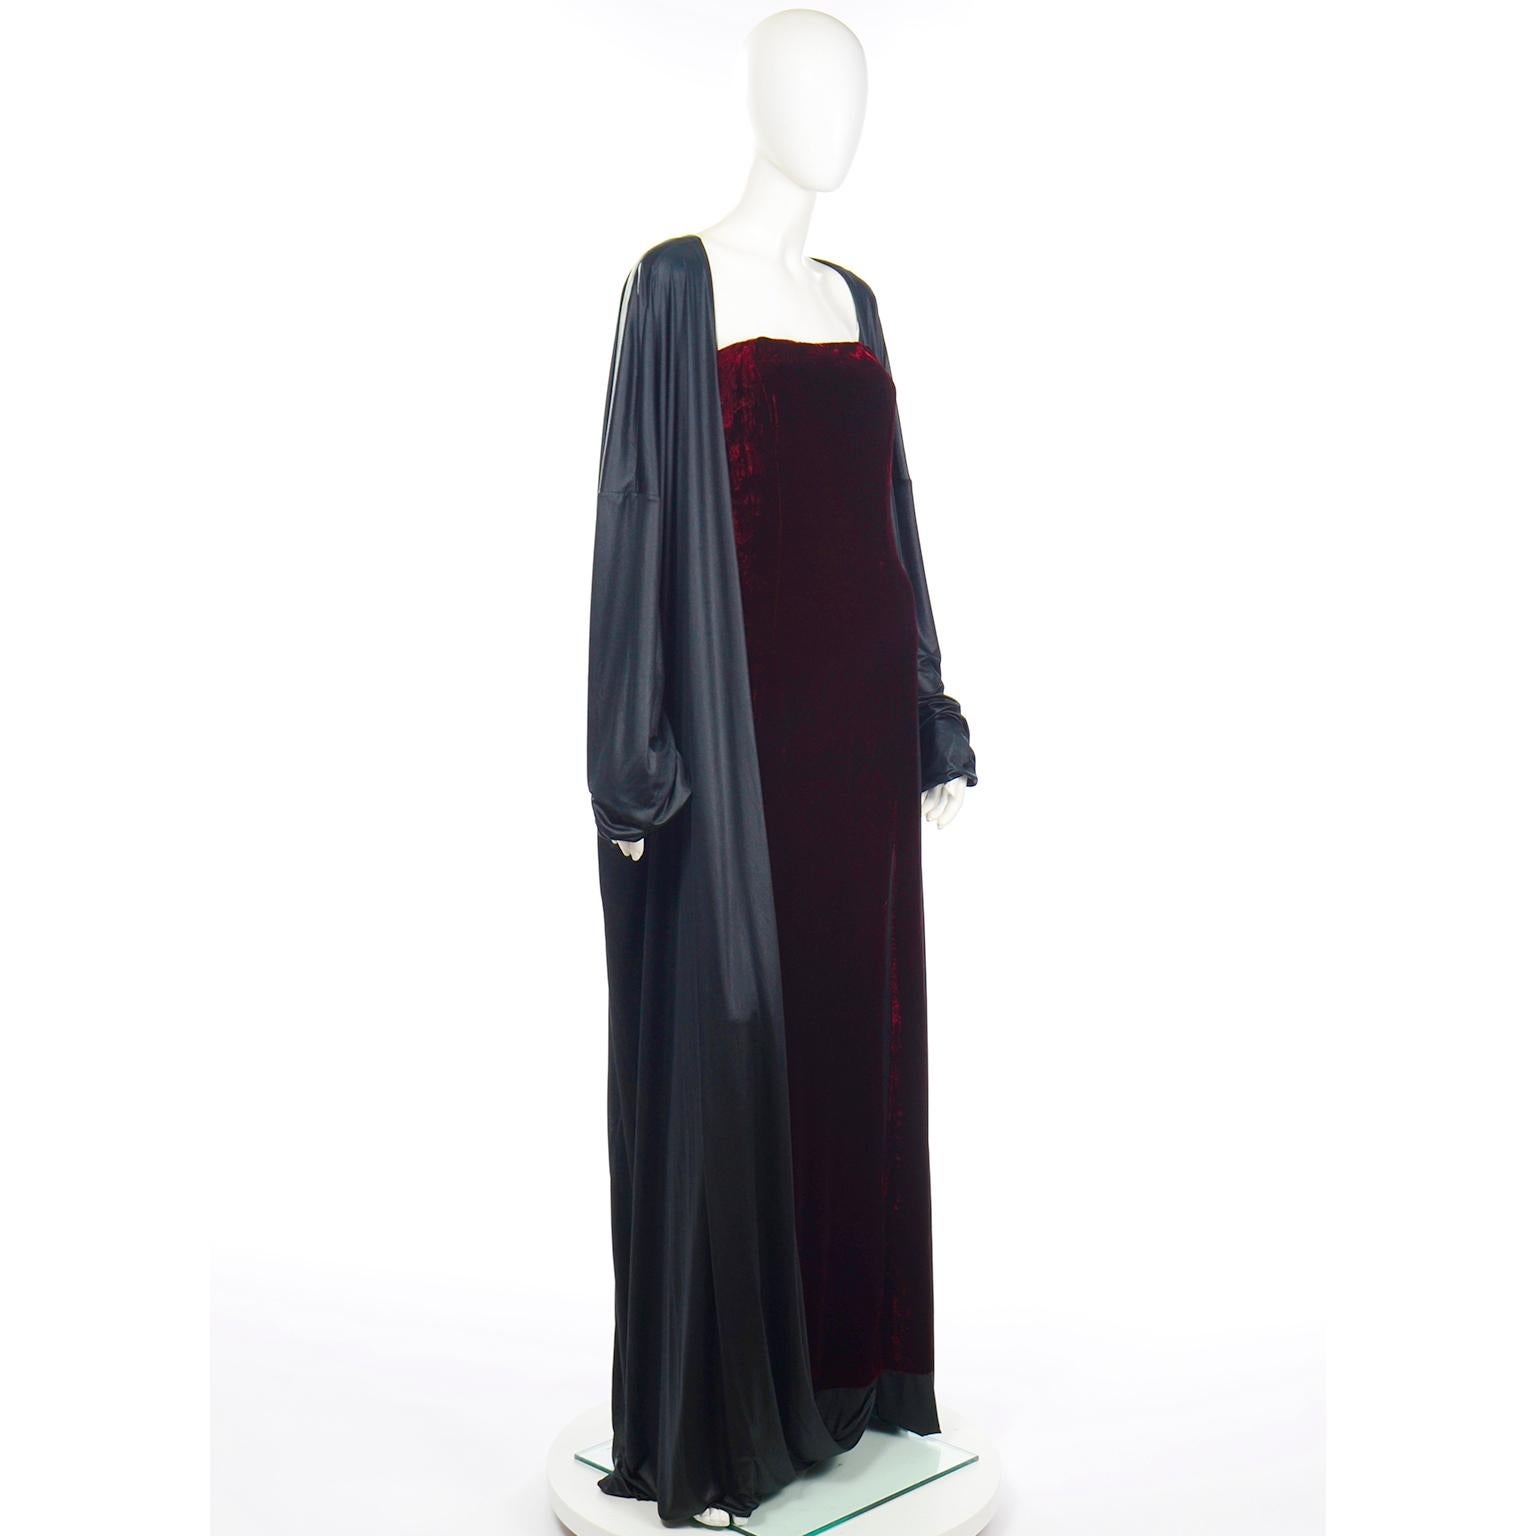 Deadstock Jean Paul Gaultier Red Velvet Evening Dress w Attached Black Coat 7